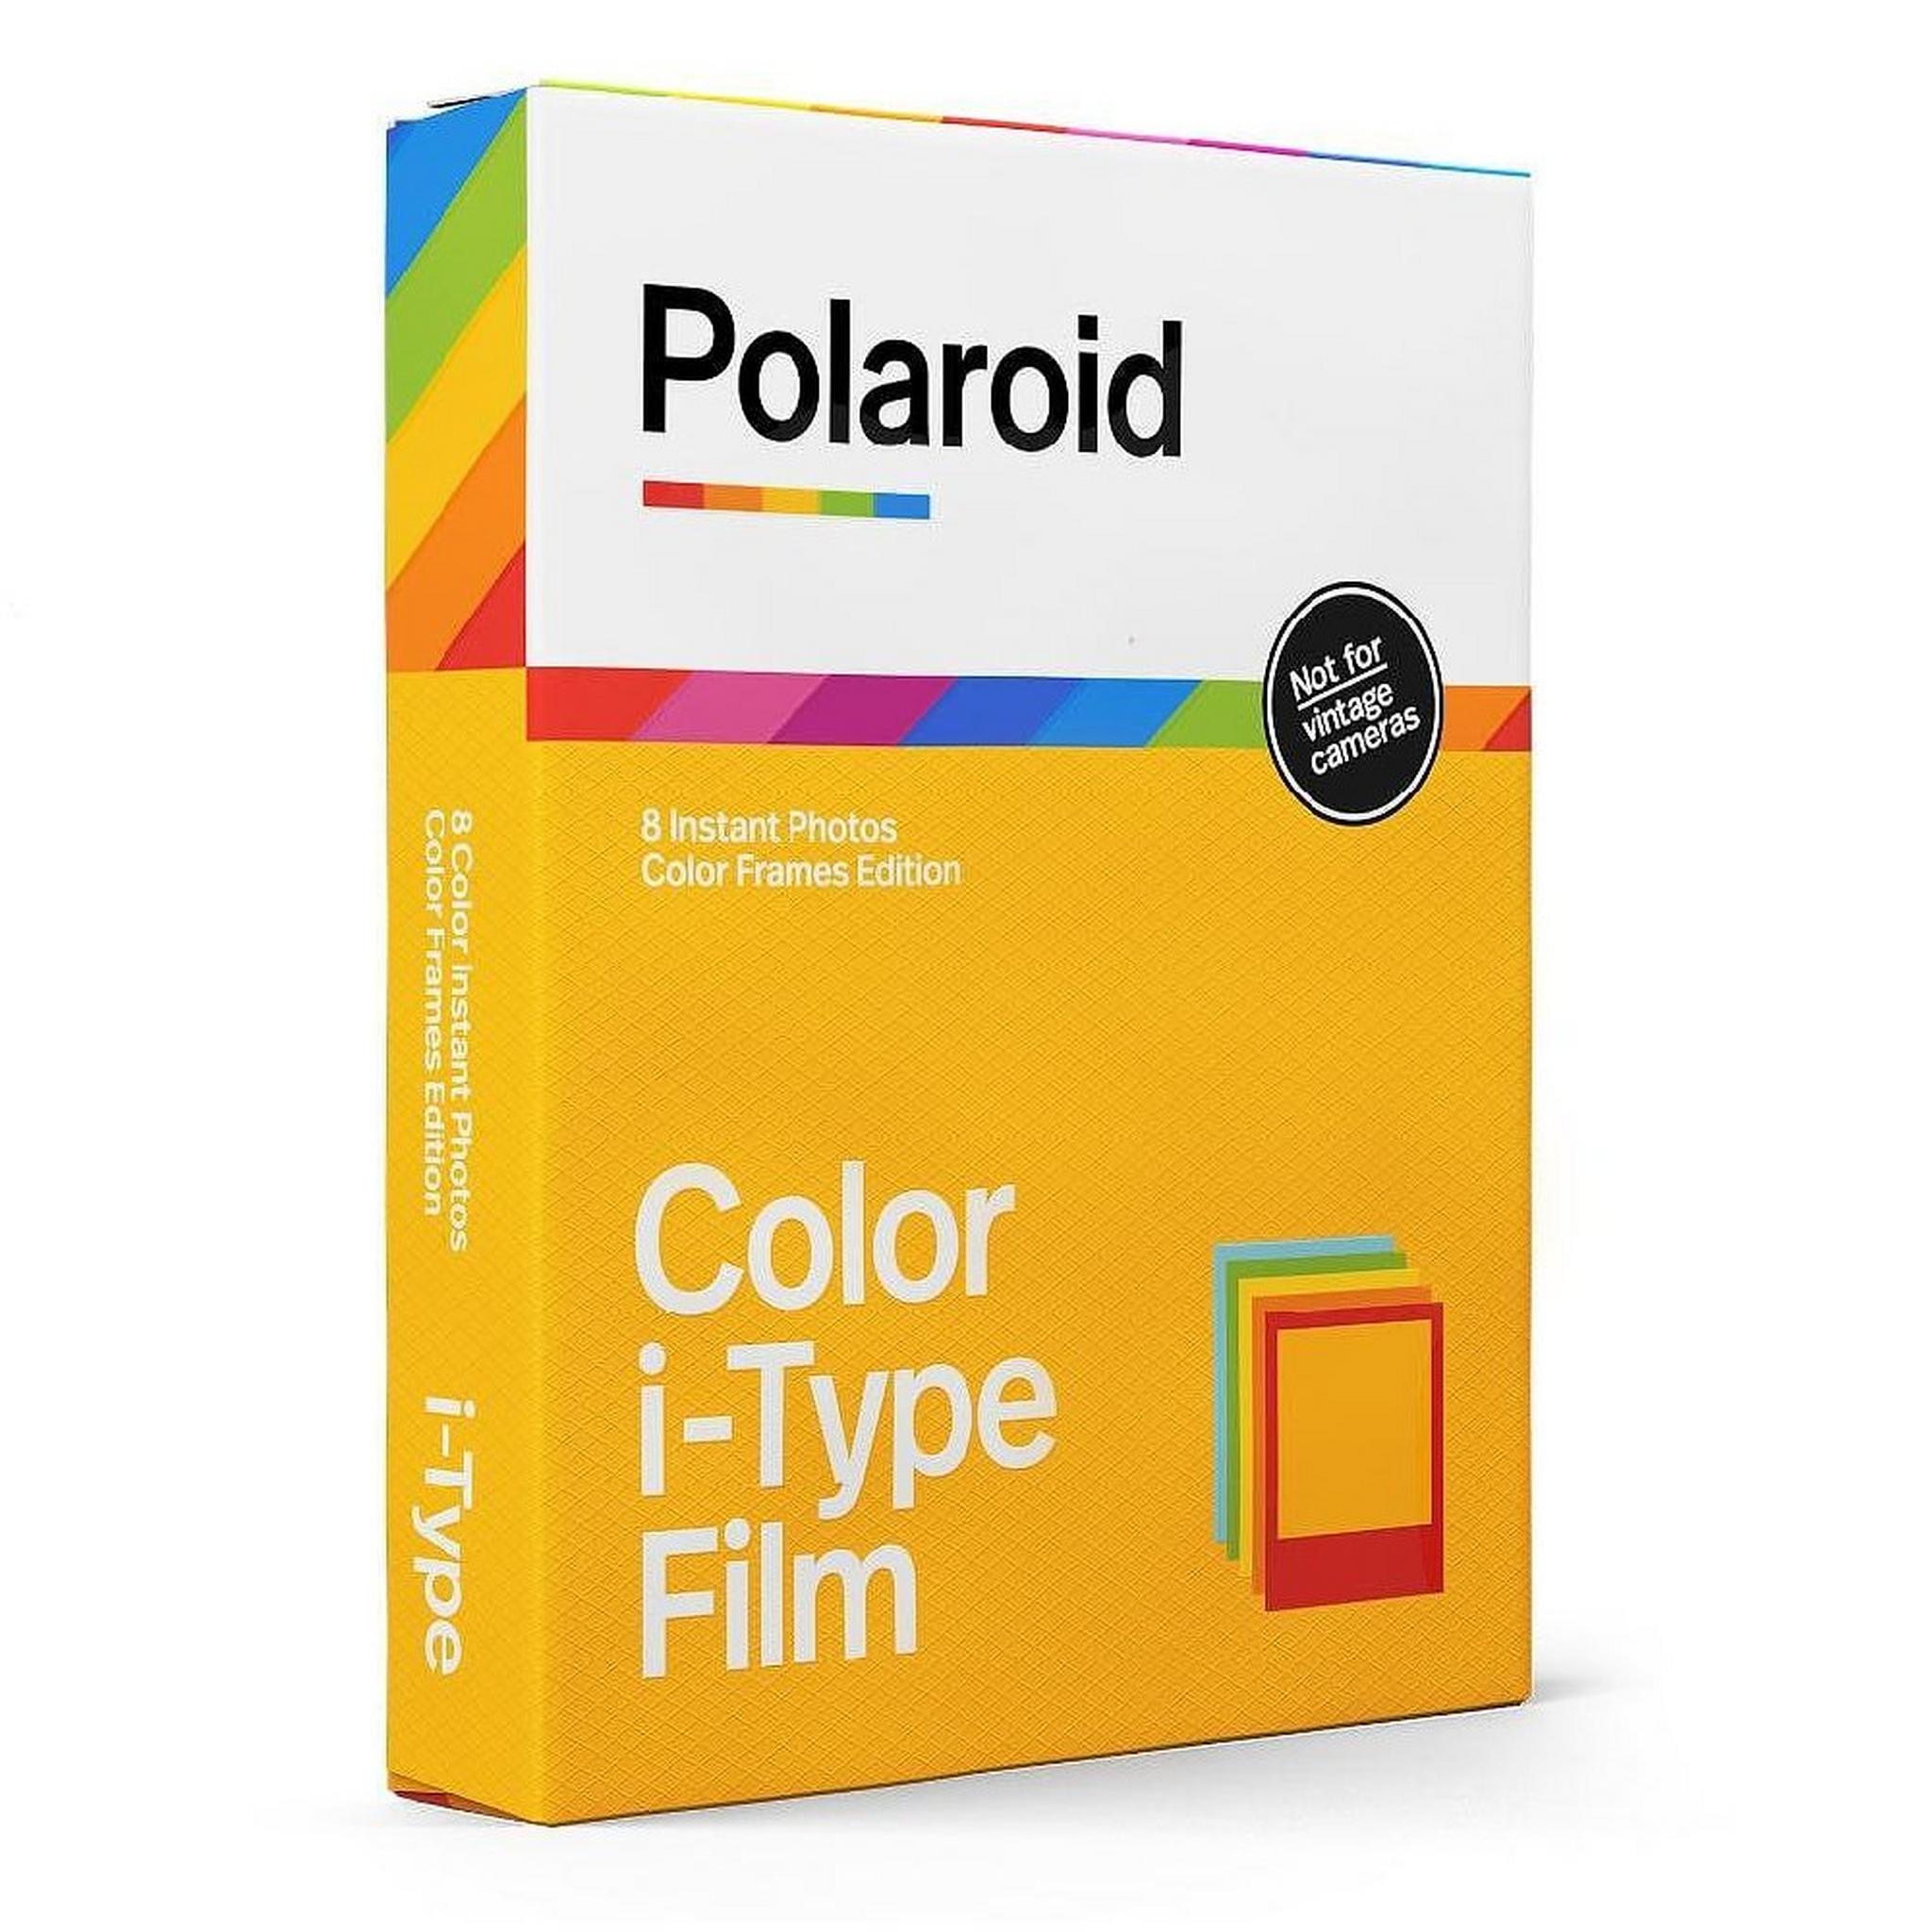 Polaroid Color Instant Film Color Frames Edition, 8 Exposures, 006214